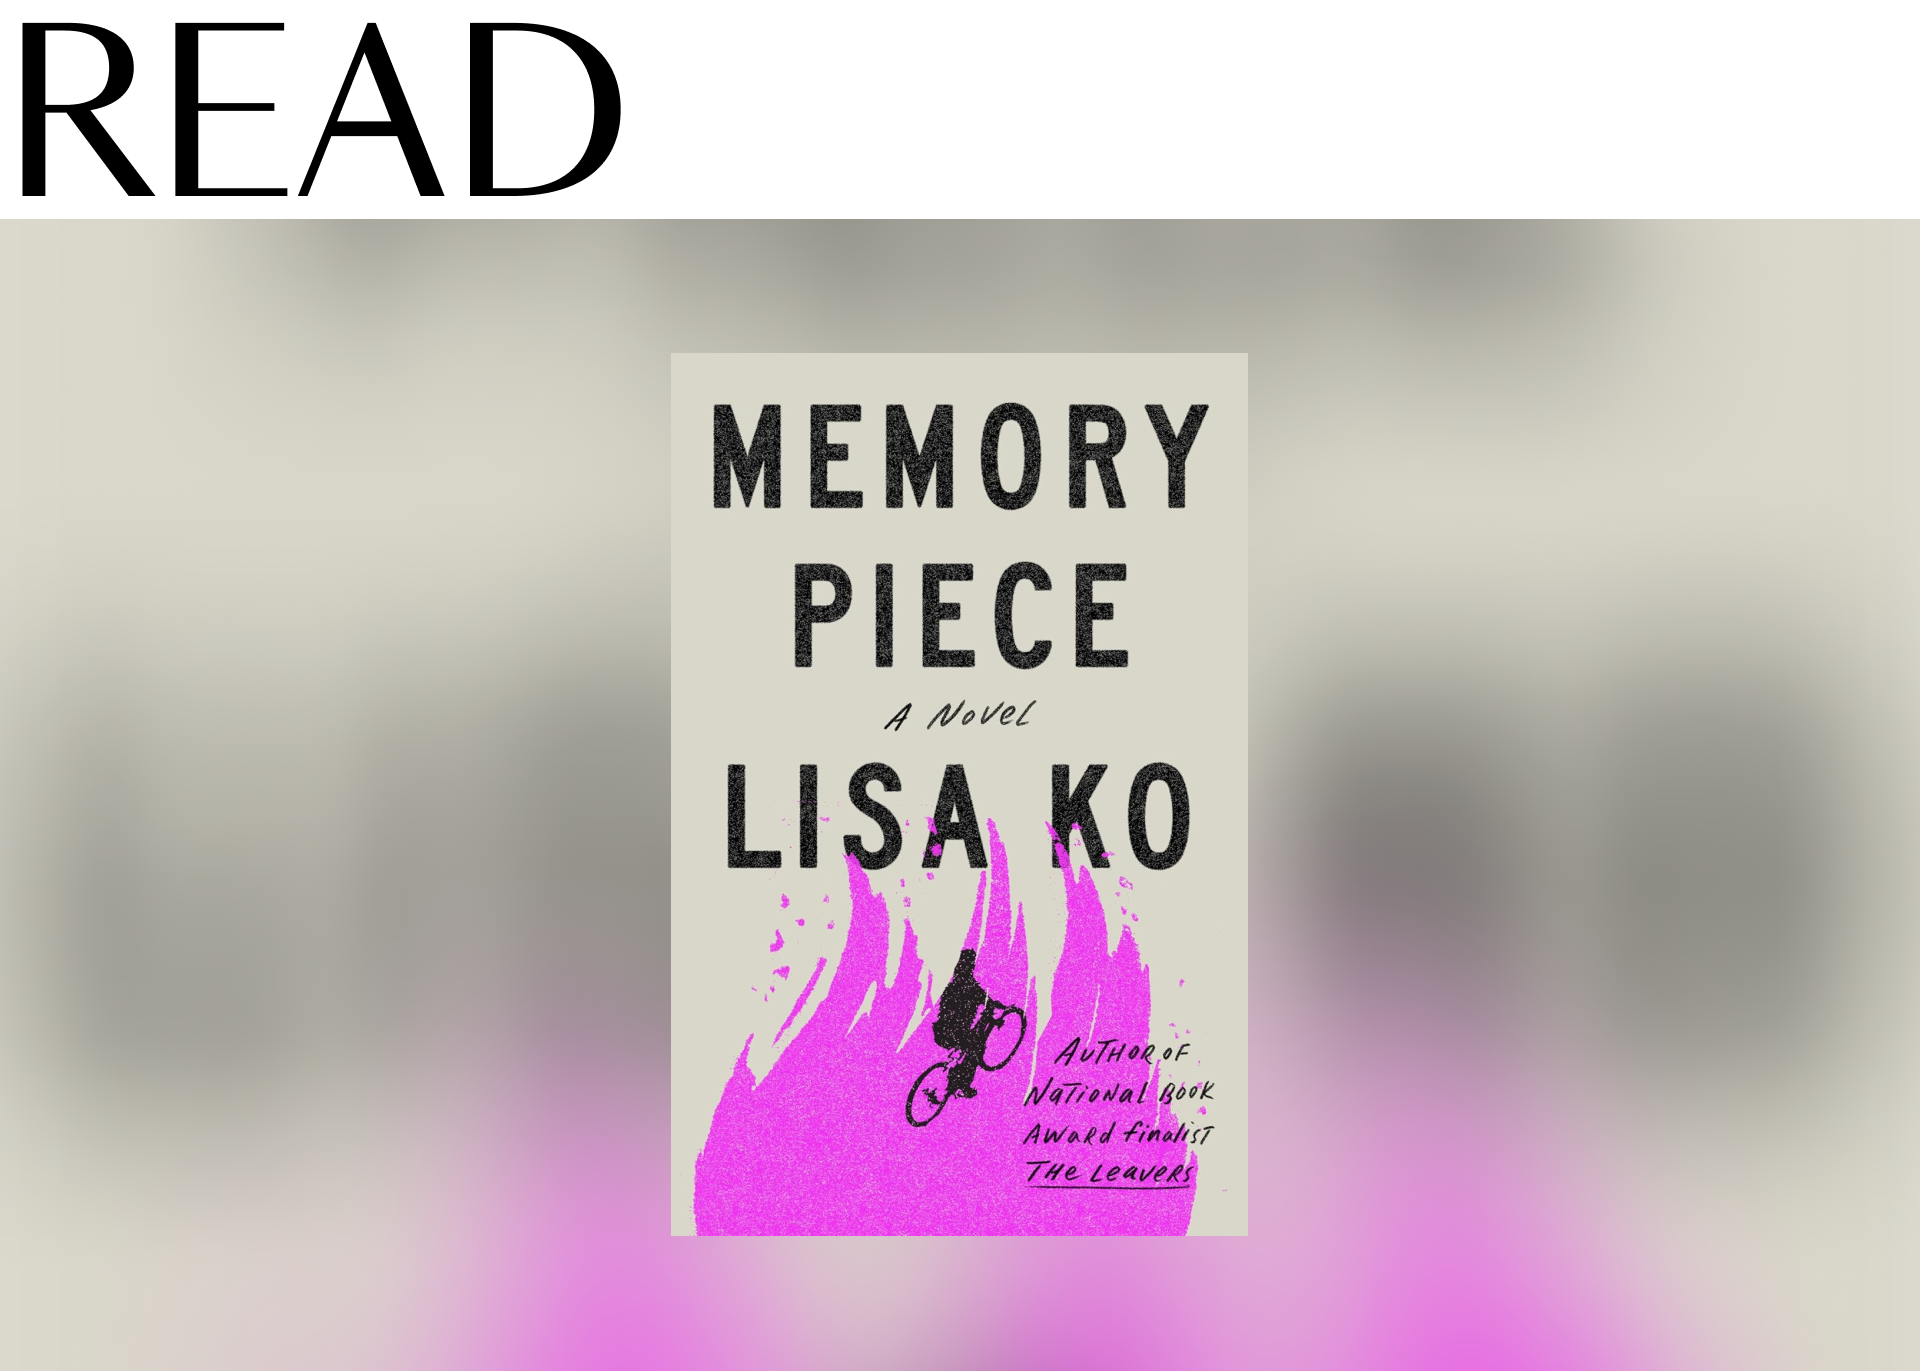 Read: Memory Piece by Lisa Ko